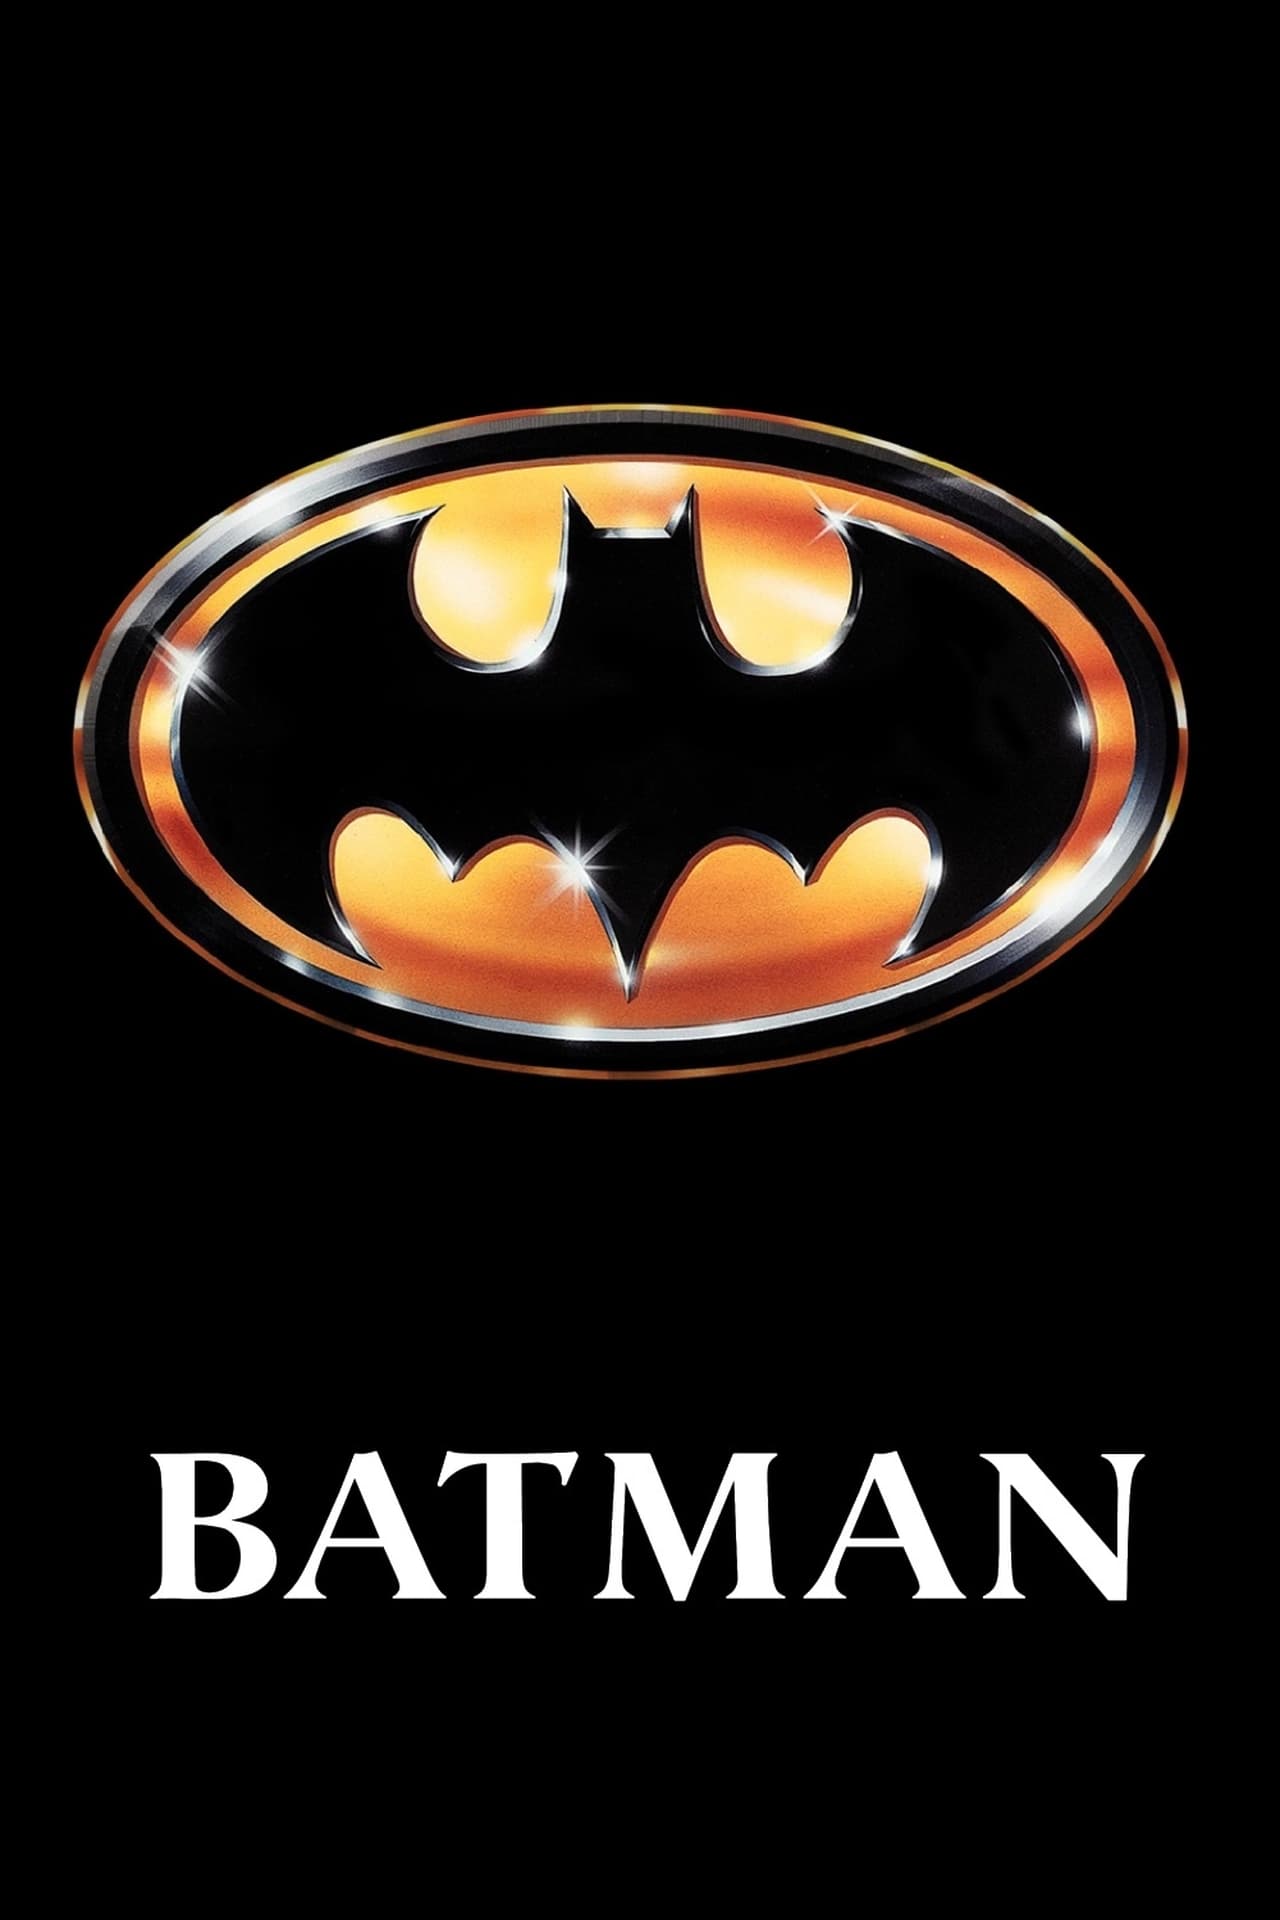 Ver Batman (1989) Online Latino HD - Pelisplus